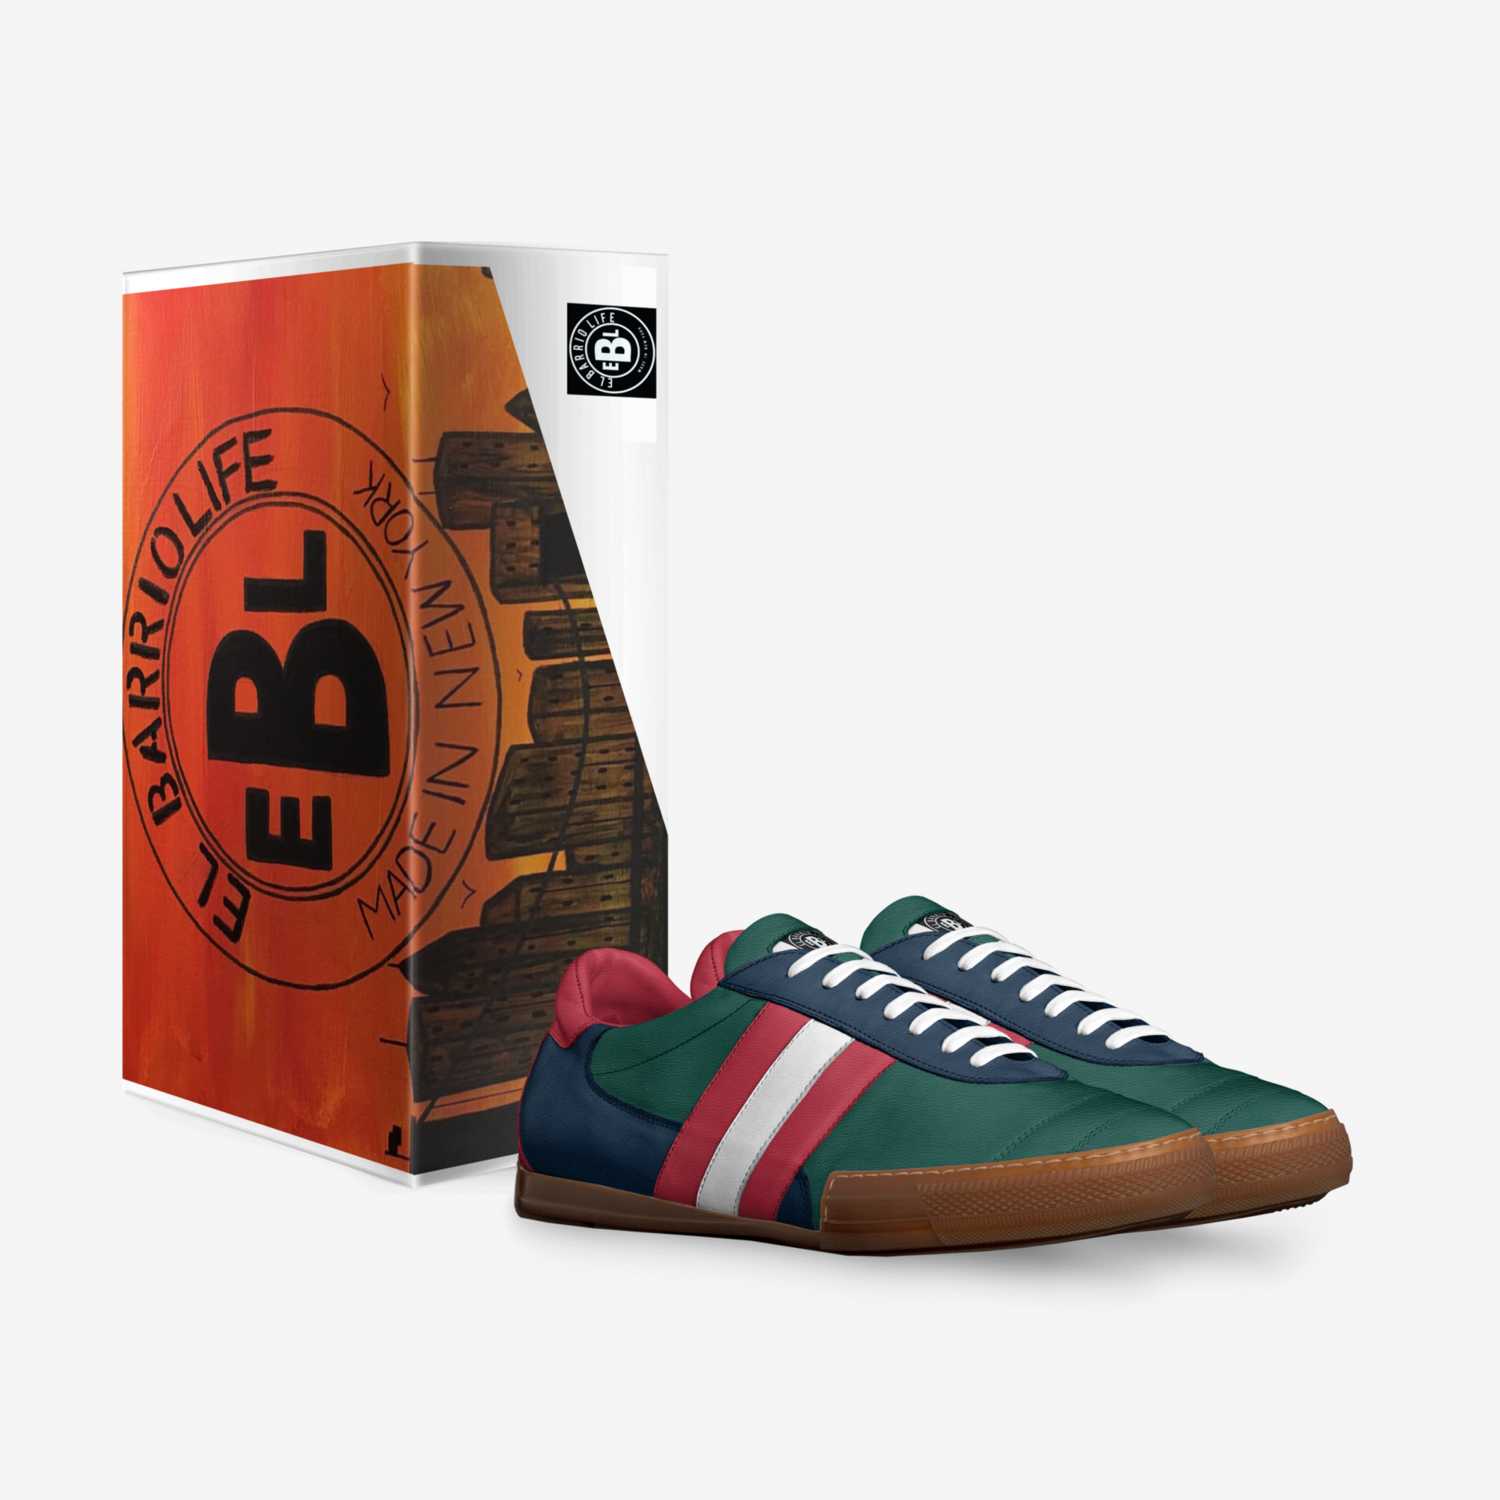 El Barrio kickz custom made in Italy shoes by Gustavo Banegas | Box view